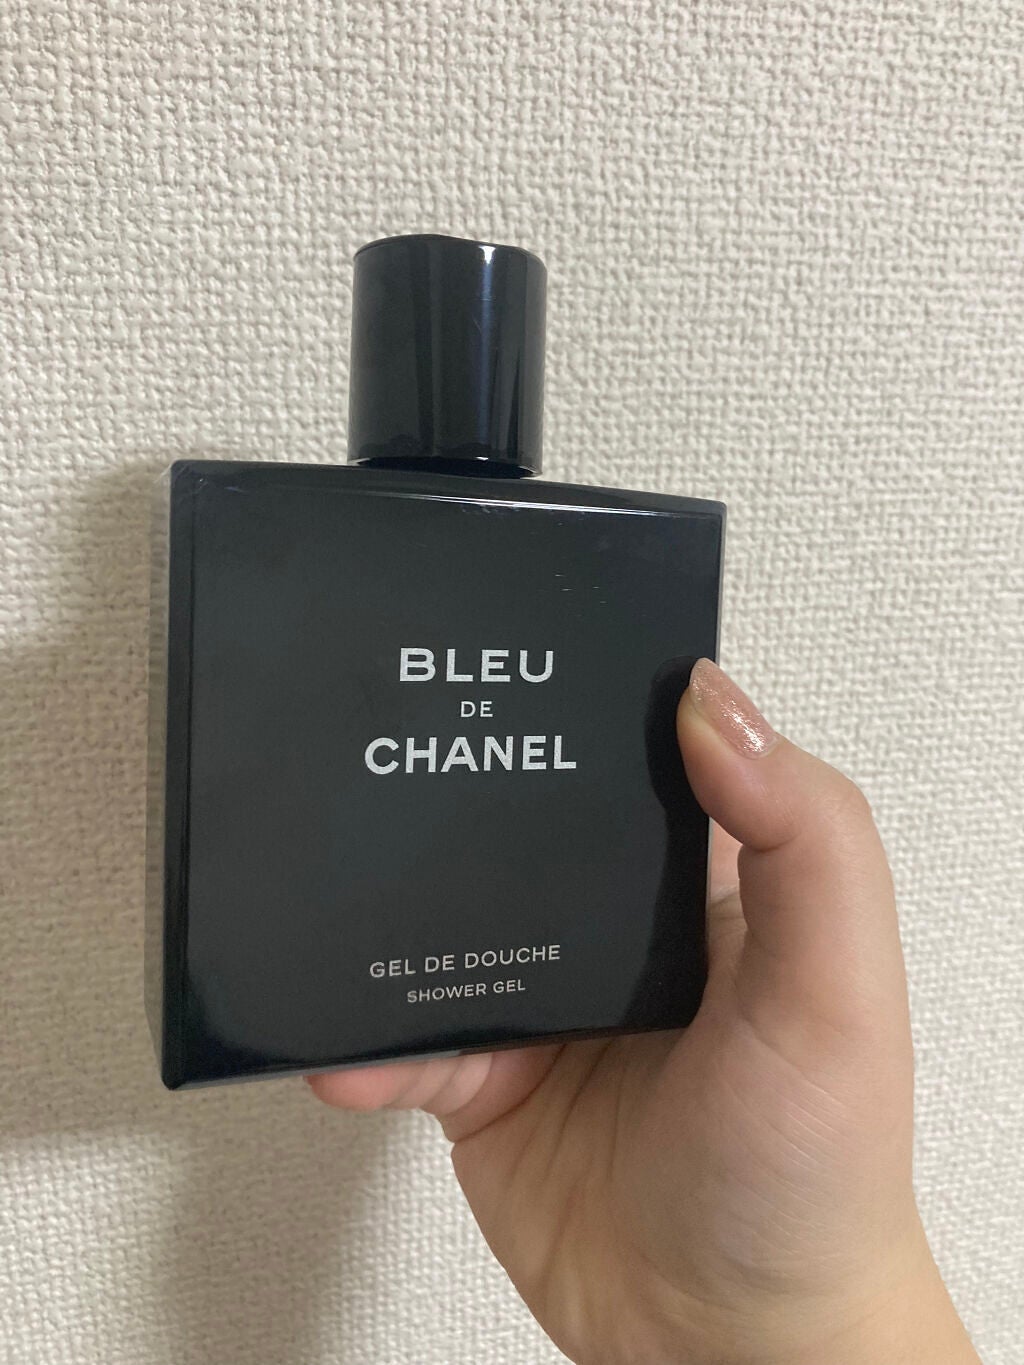 Chanel Bleu De Chanel Woda Perfumowana 150 ml - Opinie i ceny na